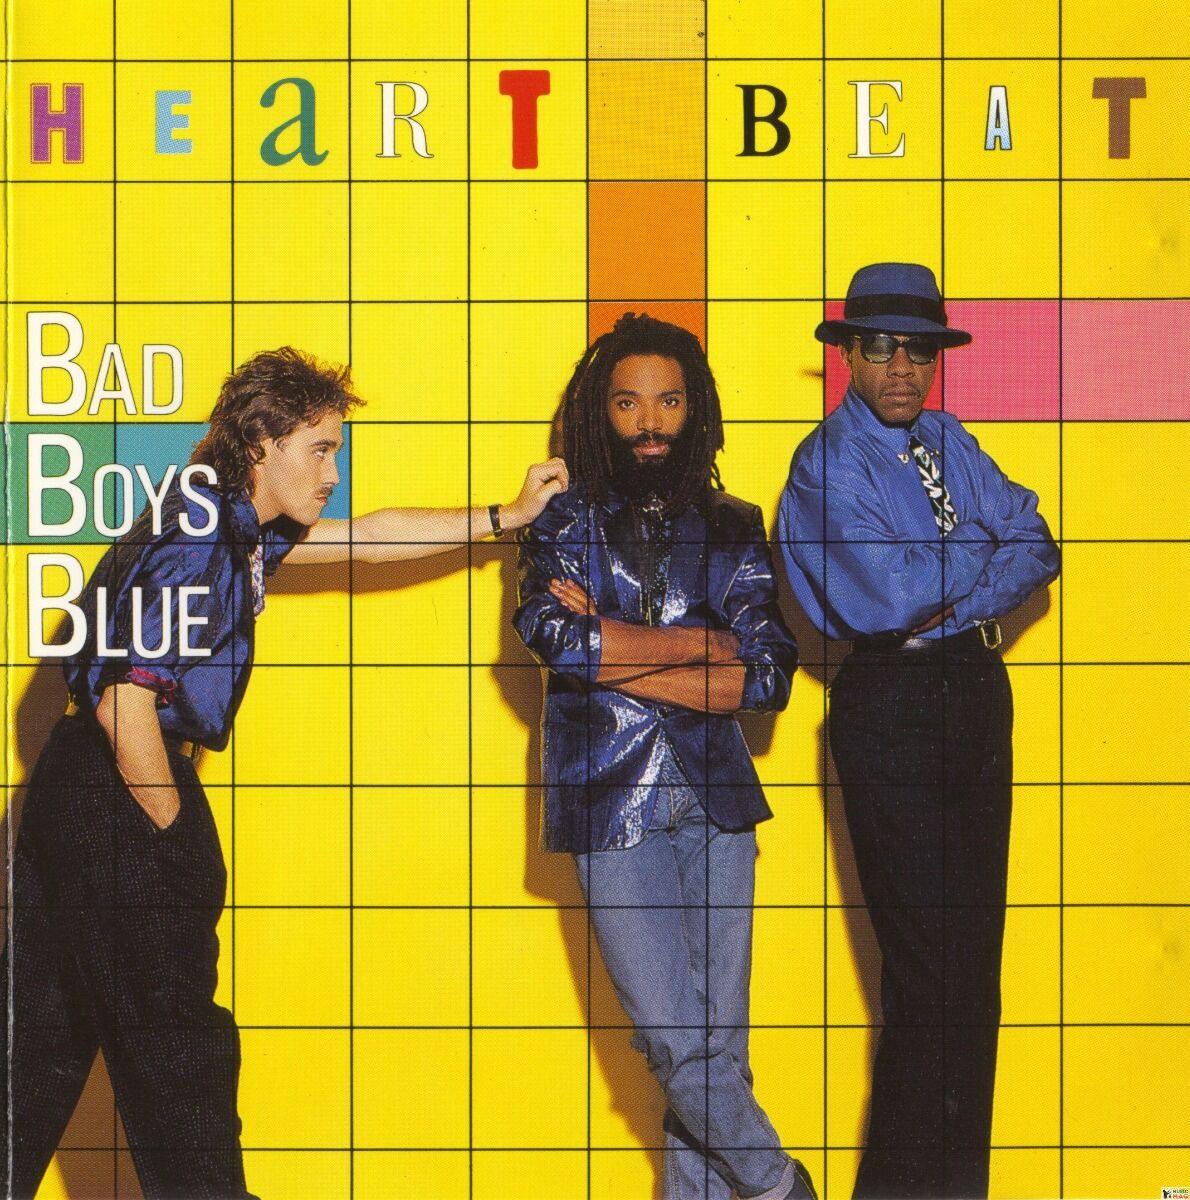 Bad Boys Blue  Heart Beat LP